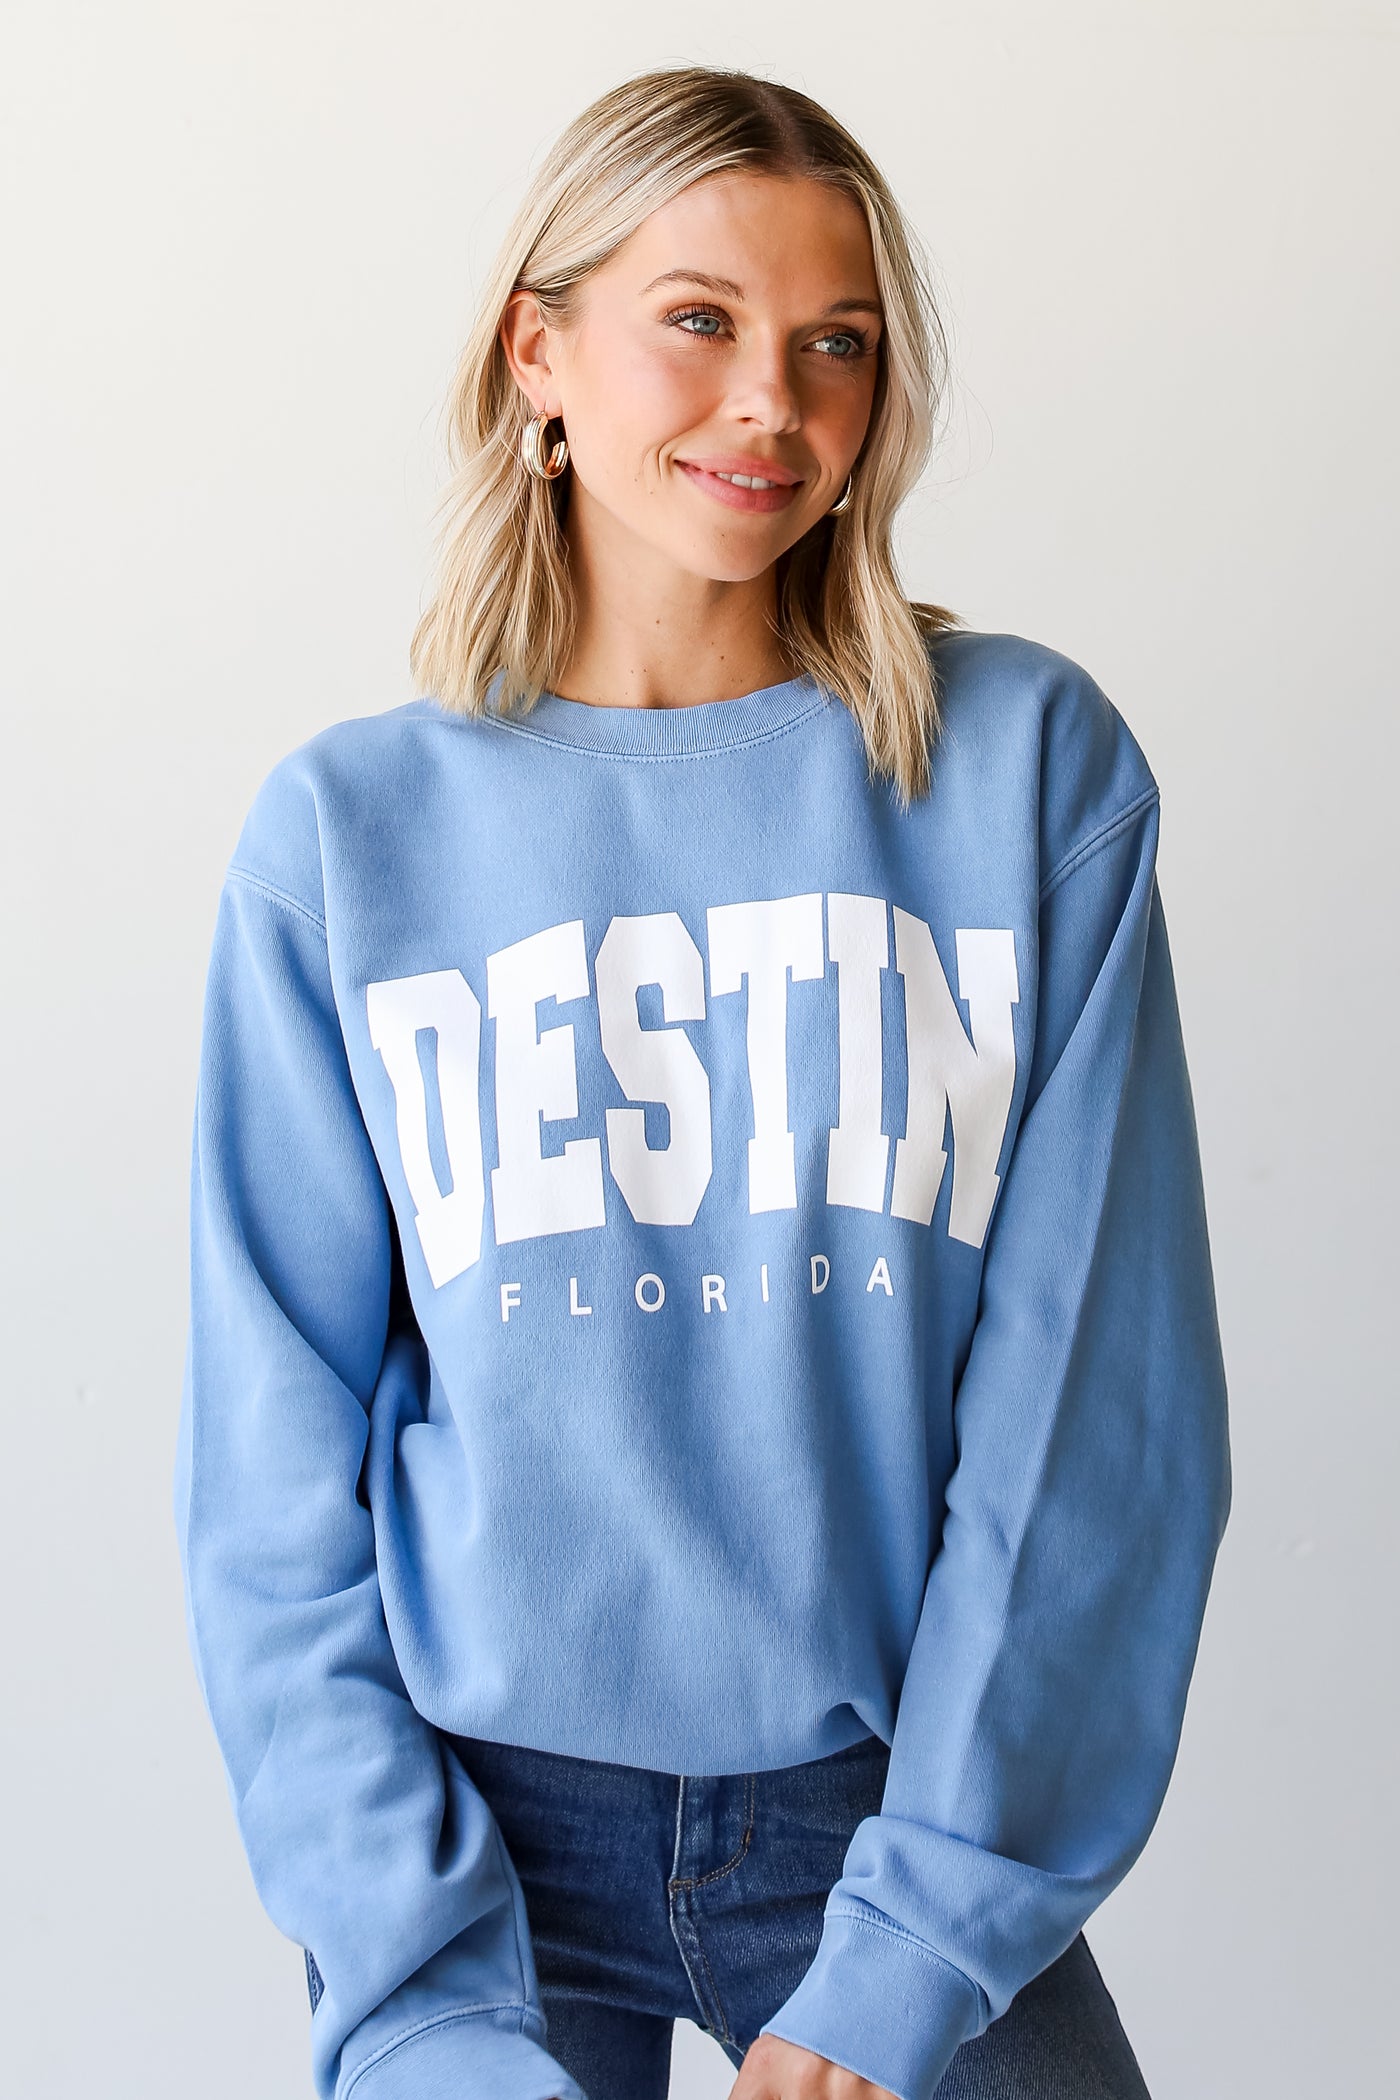 Blue Destin Florida Block Letter Pullover. Oversized Comfy Sweatshirt. Florida Sweatshirt